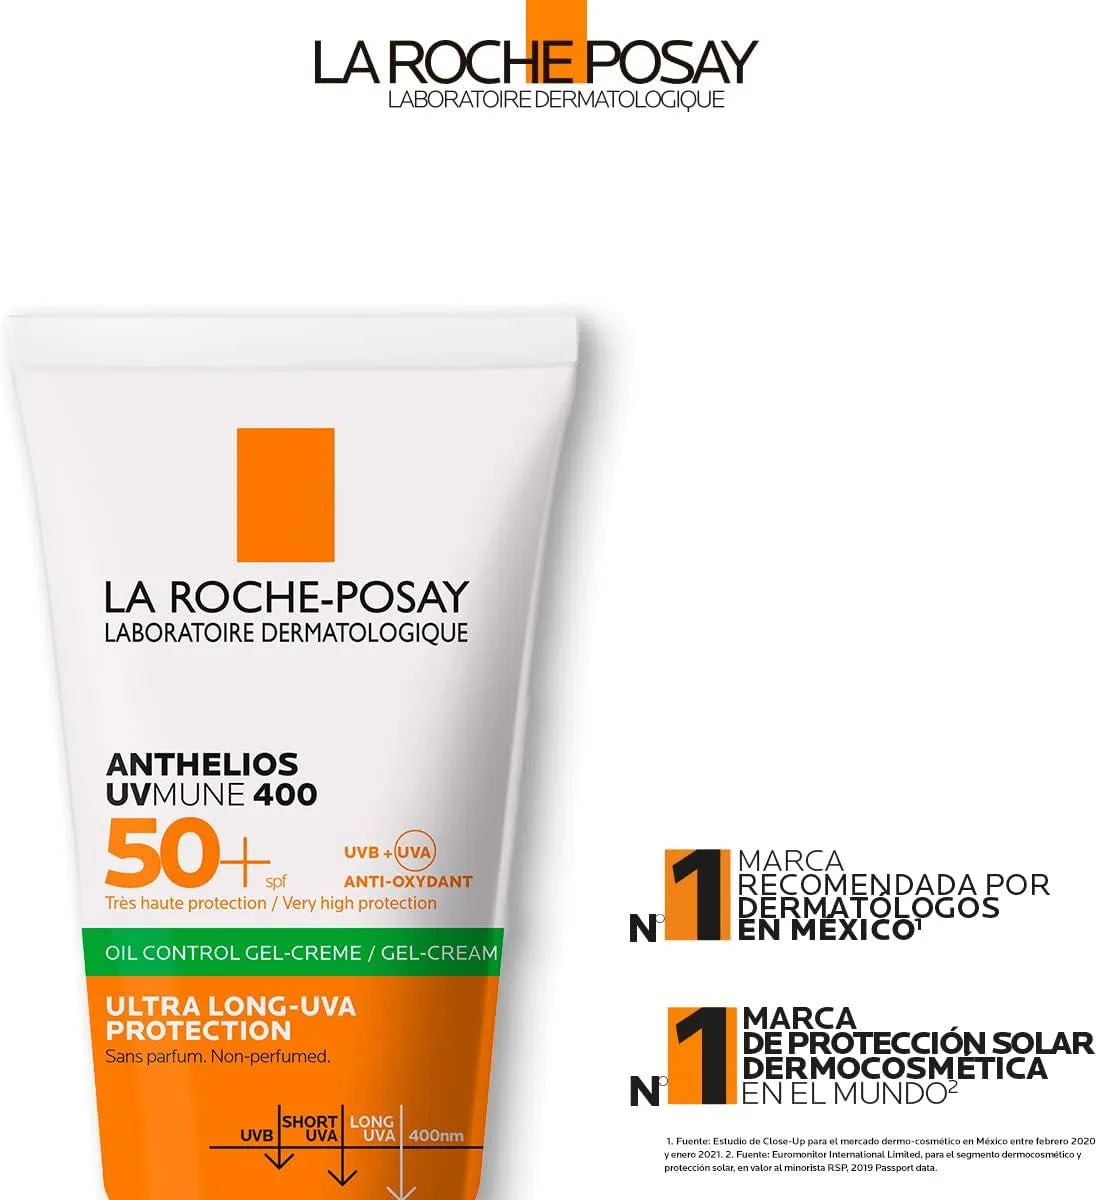 La Roche-Posay Anthelios 50+ Anti-Shine Gel Cream 50ml - Get Shine Free Skin